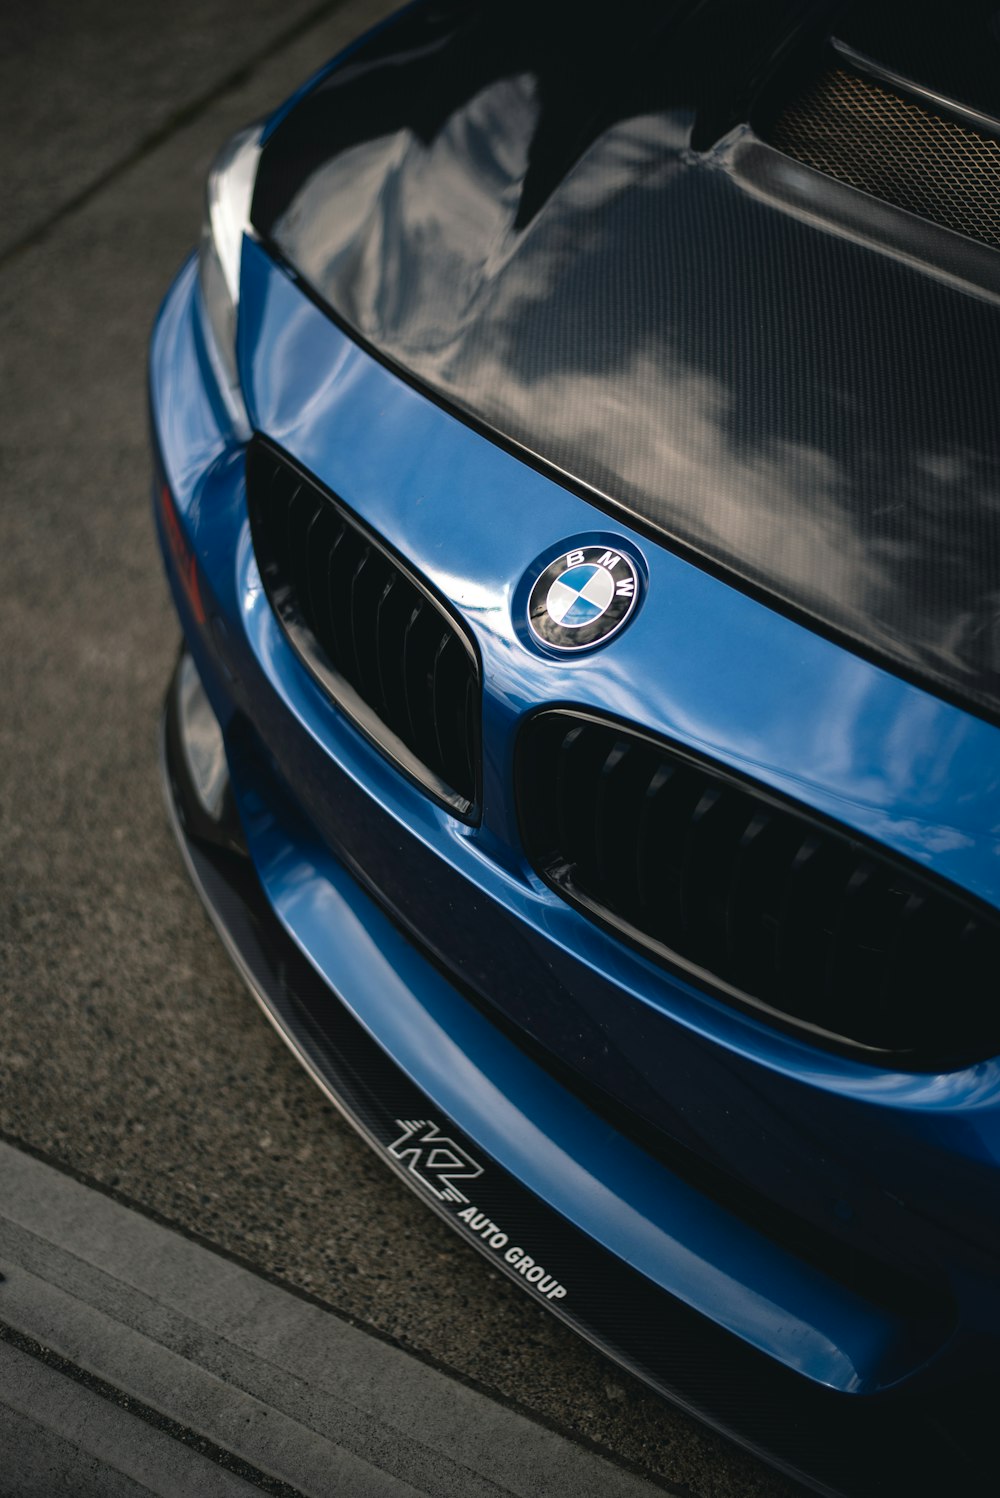 black and blue BMW car